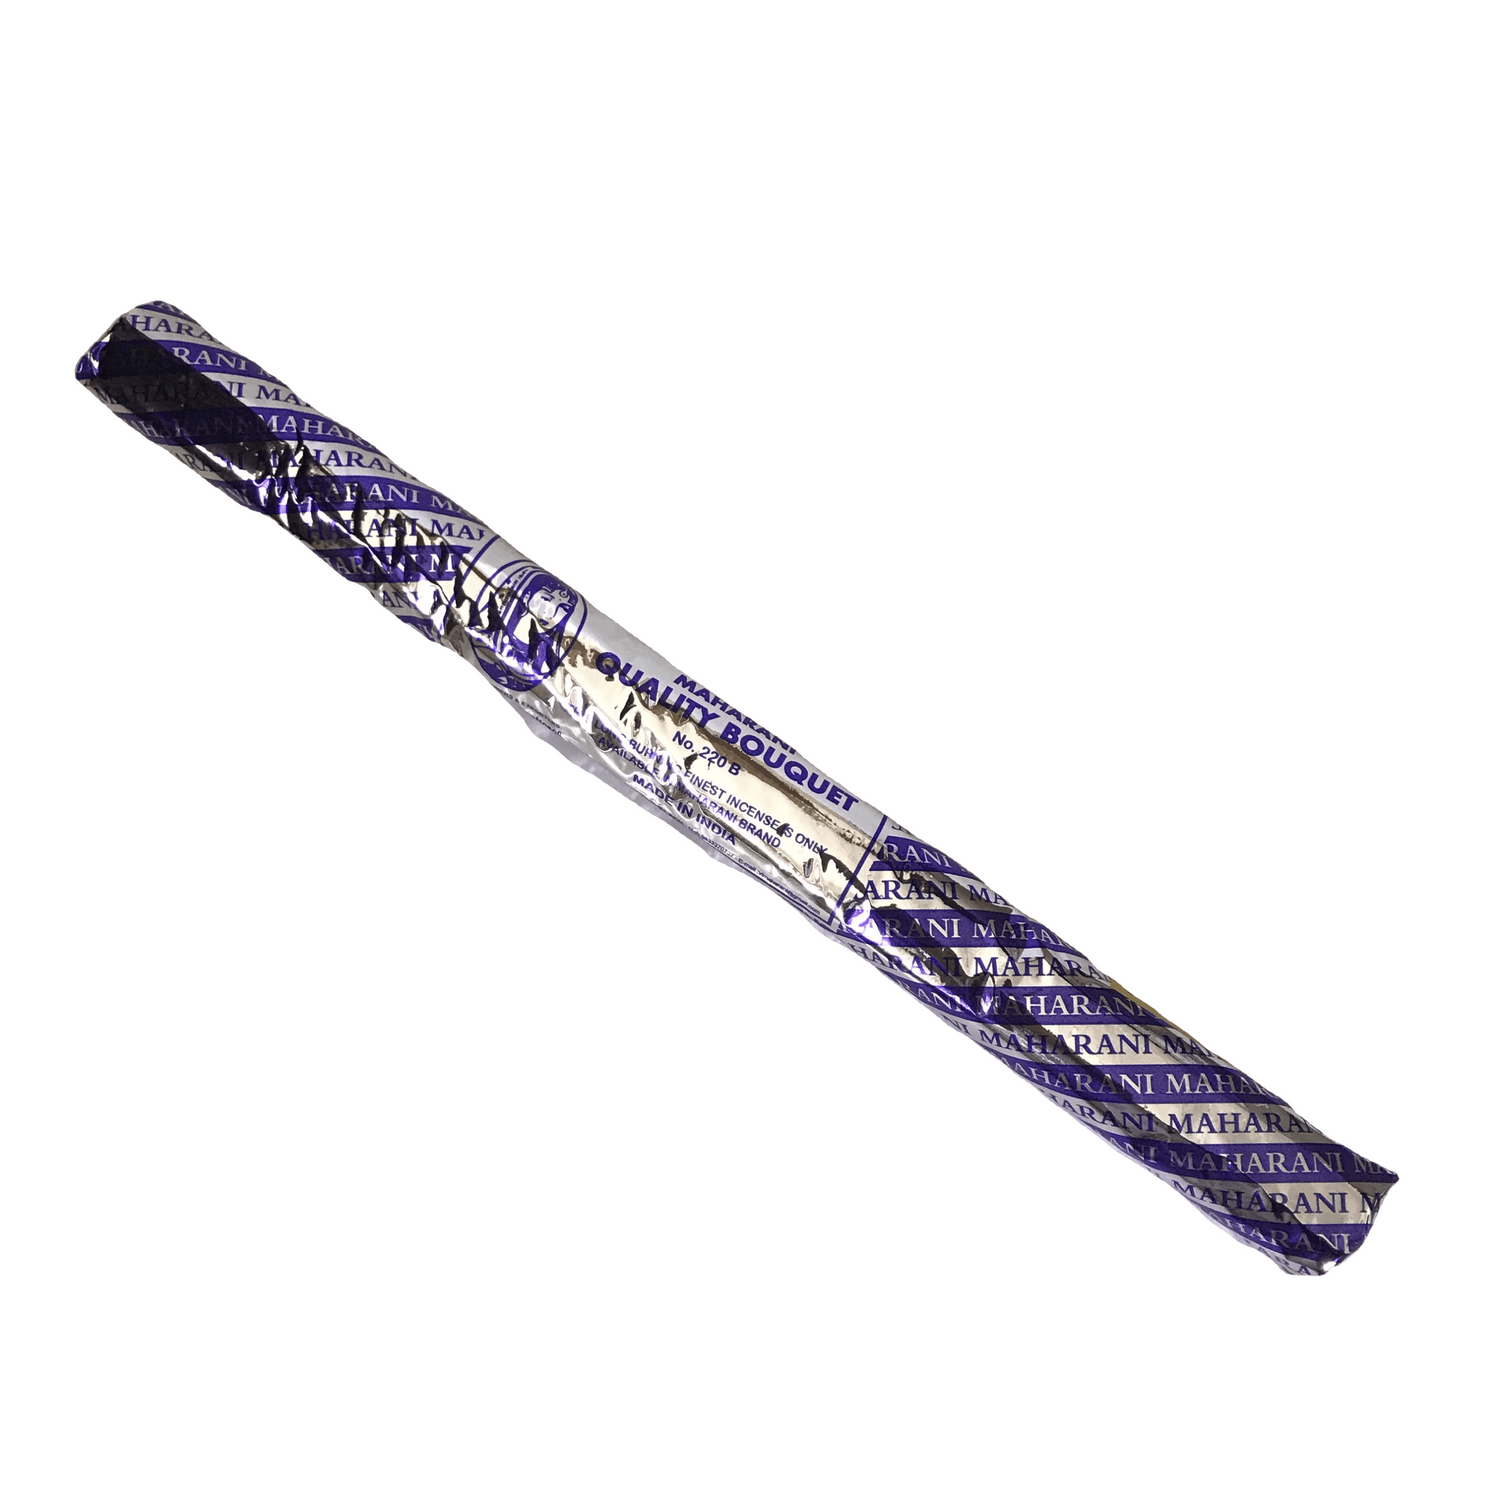 Maharani XL Incense Sticks - Crystal Geological